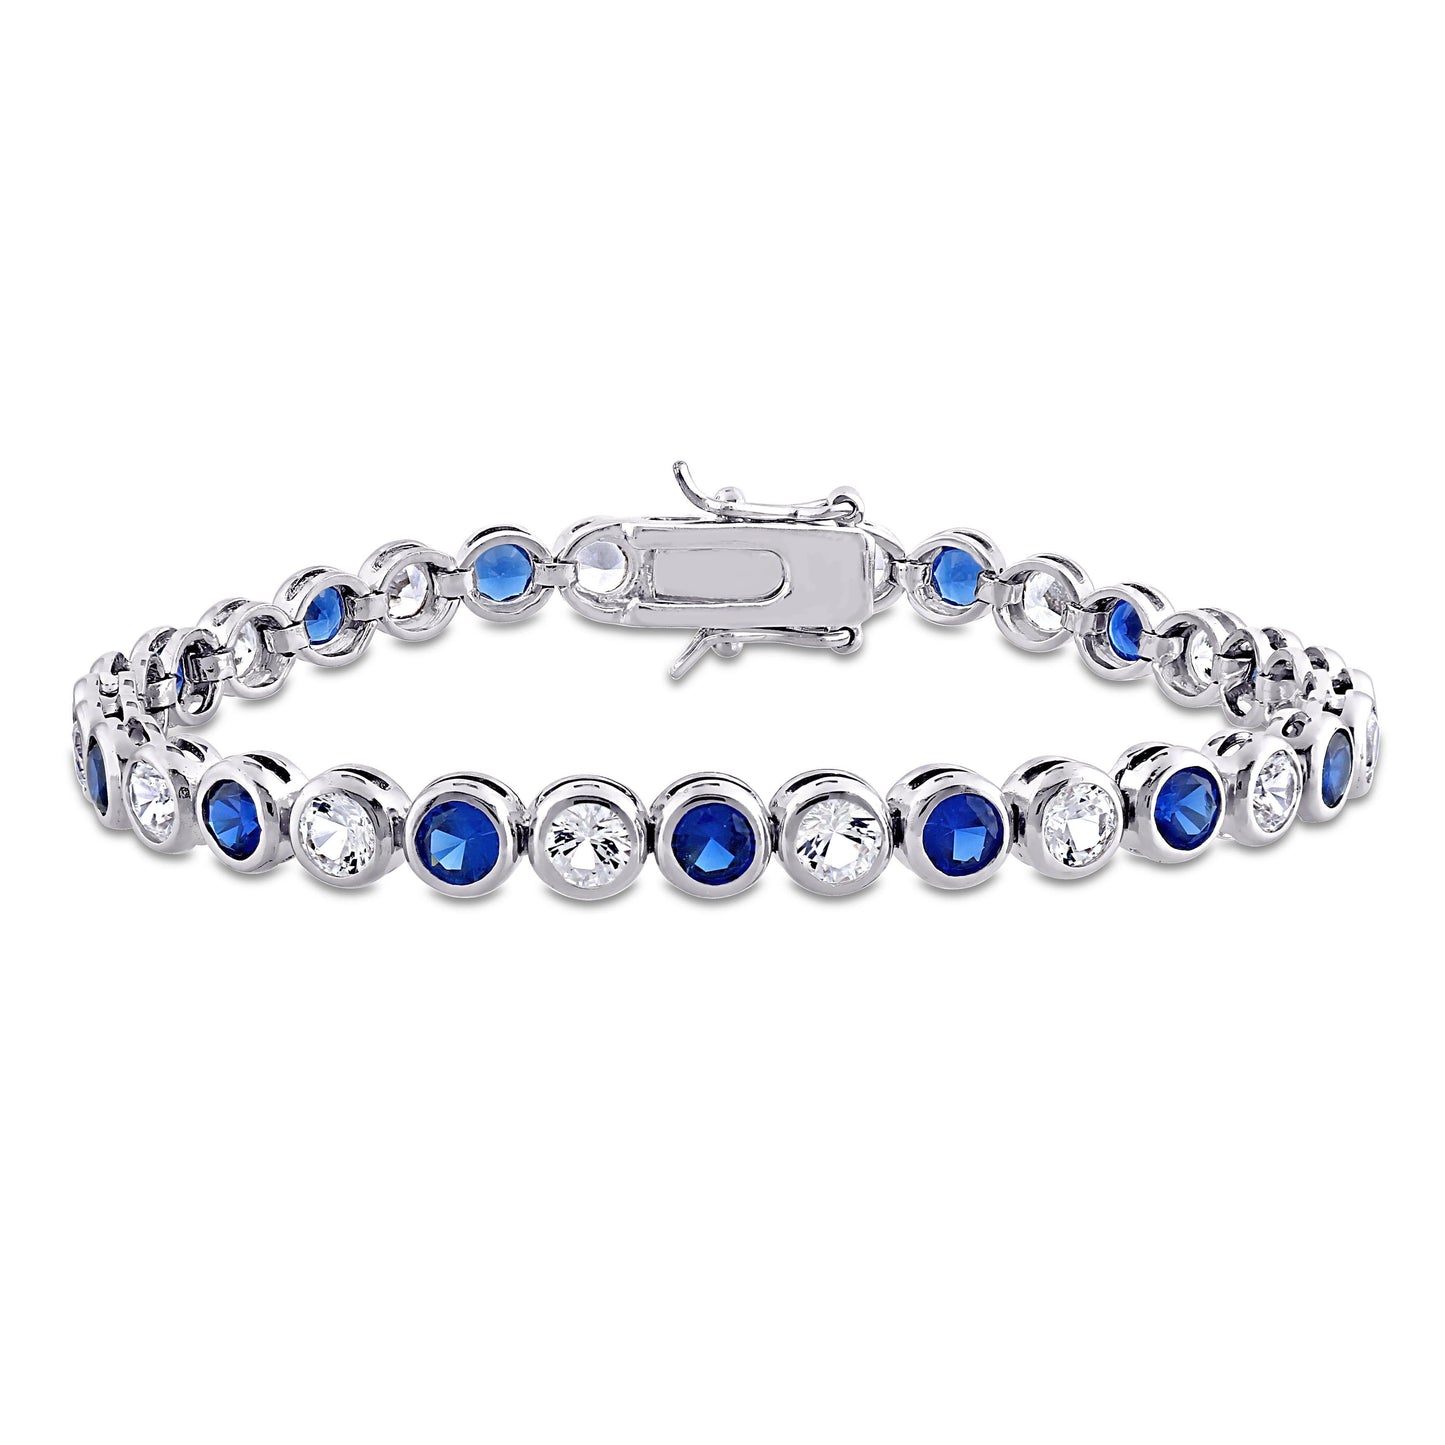 9.5ct Blue & White Sapphire Bracelet in Sterling Silver